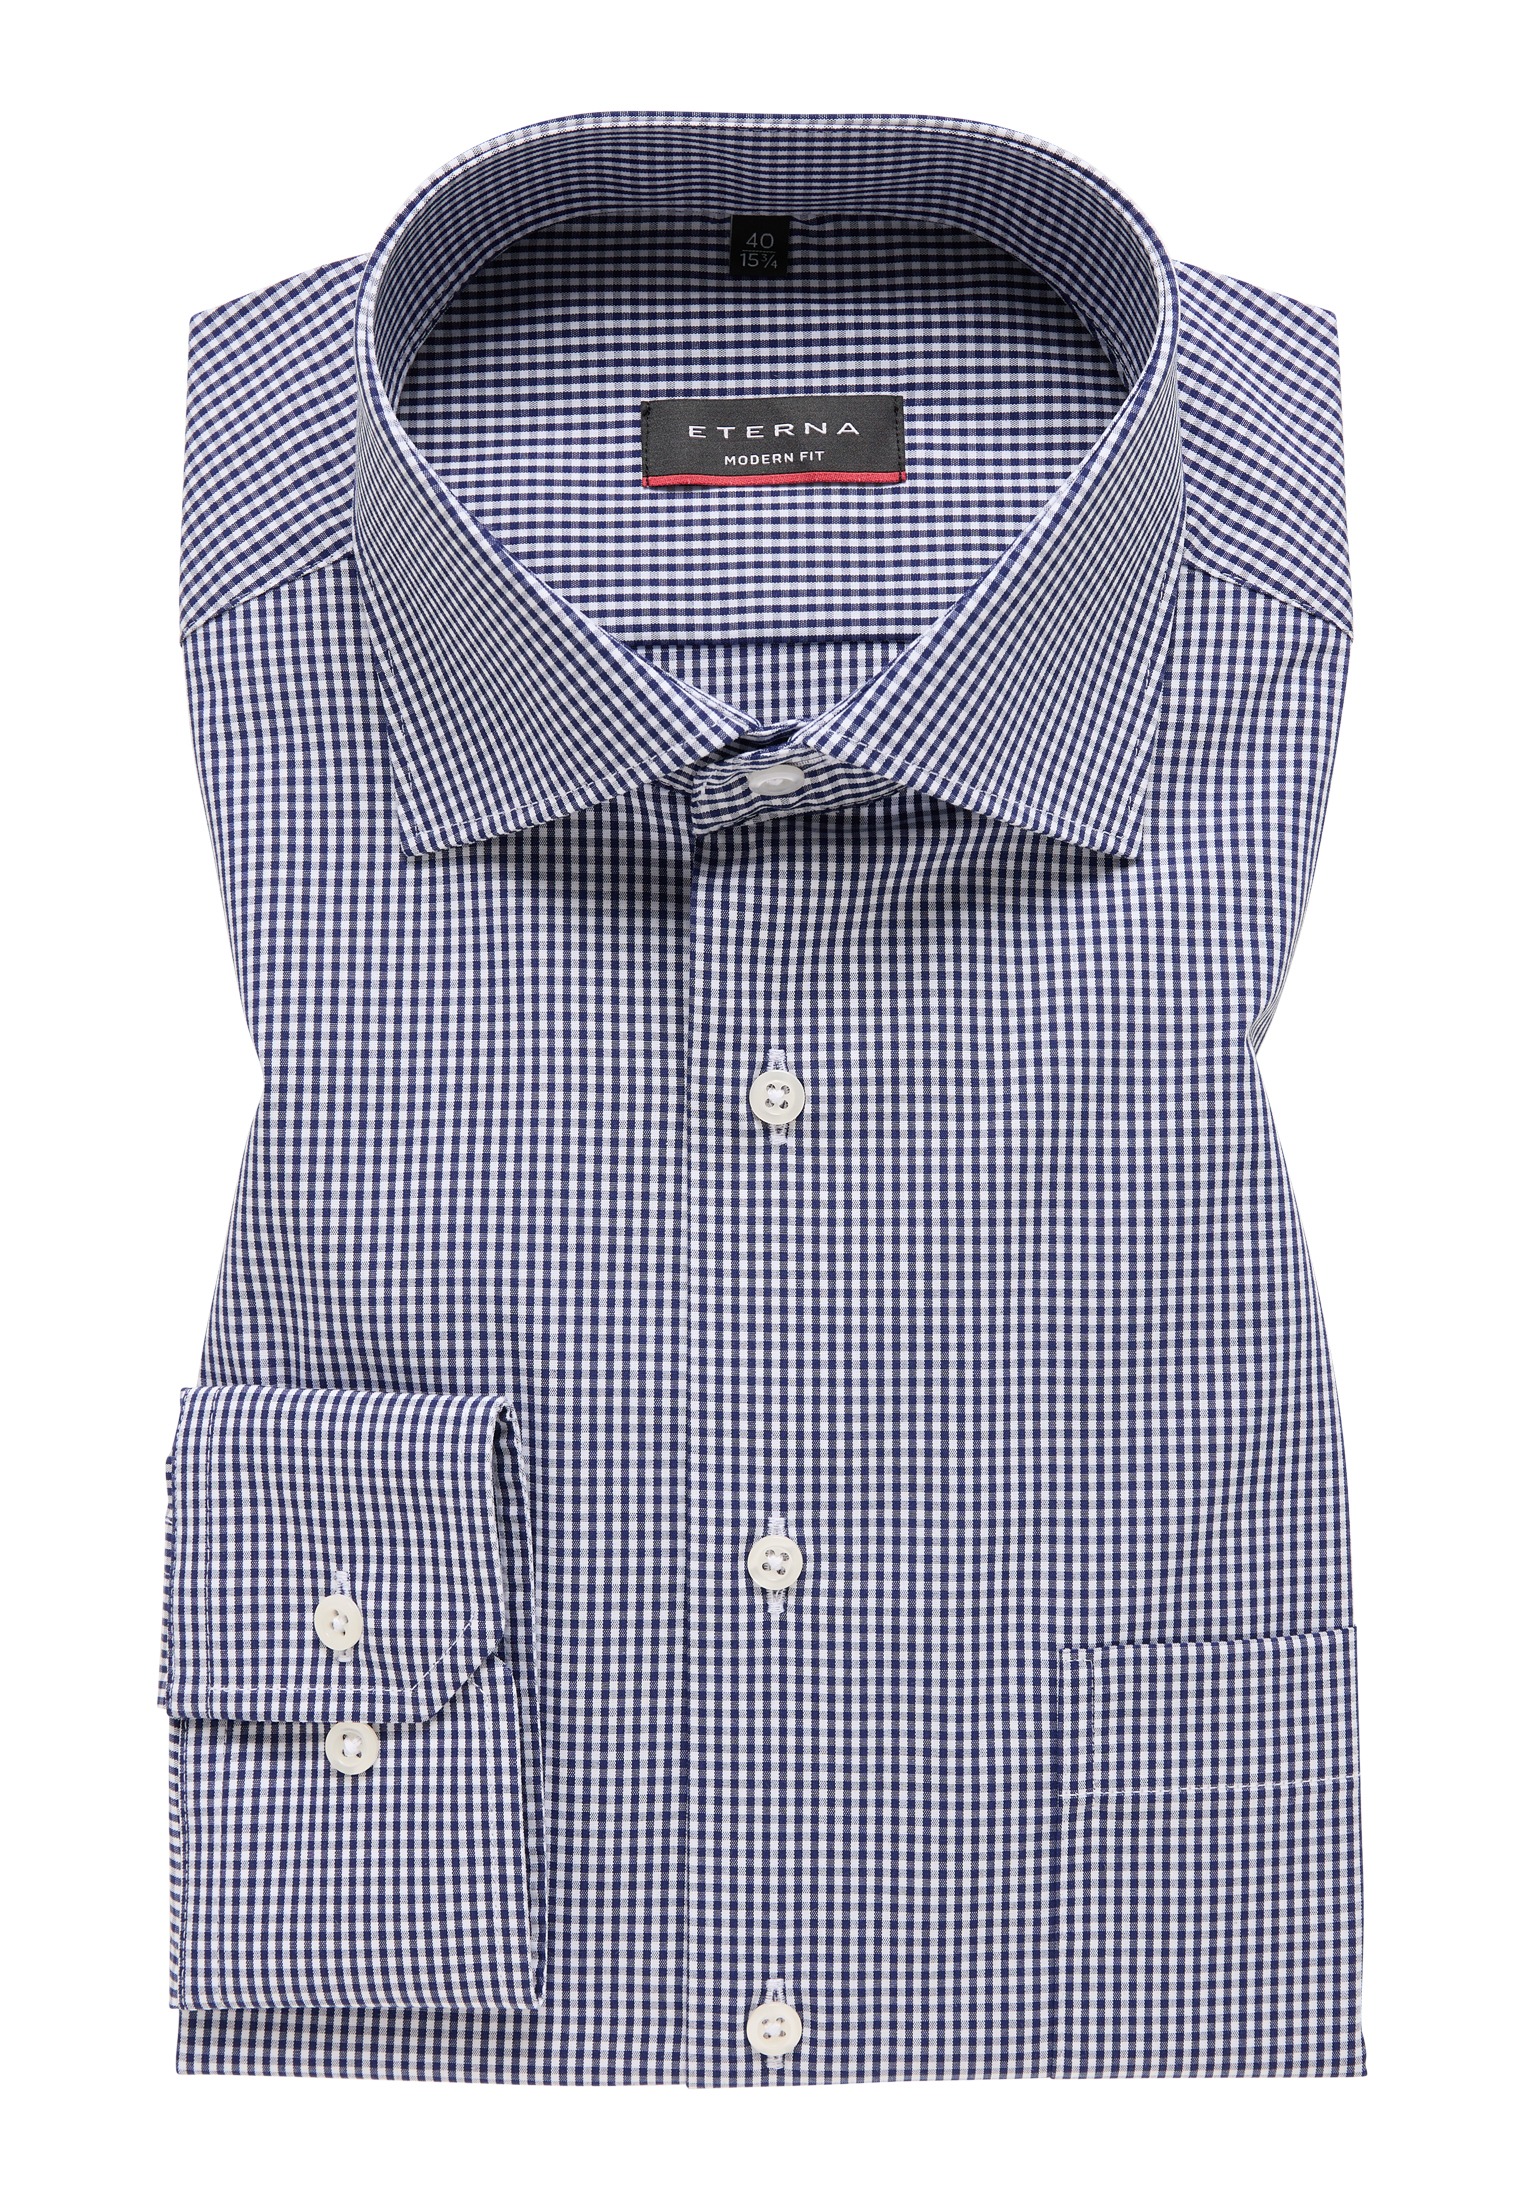 MODERN FIT Shirt in dark blue checkered | dark blue | long sleeve | 48 |  1SH11561-01-81-48-1/1